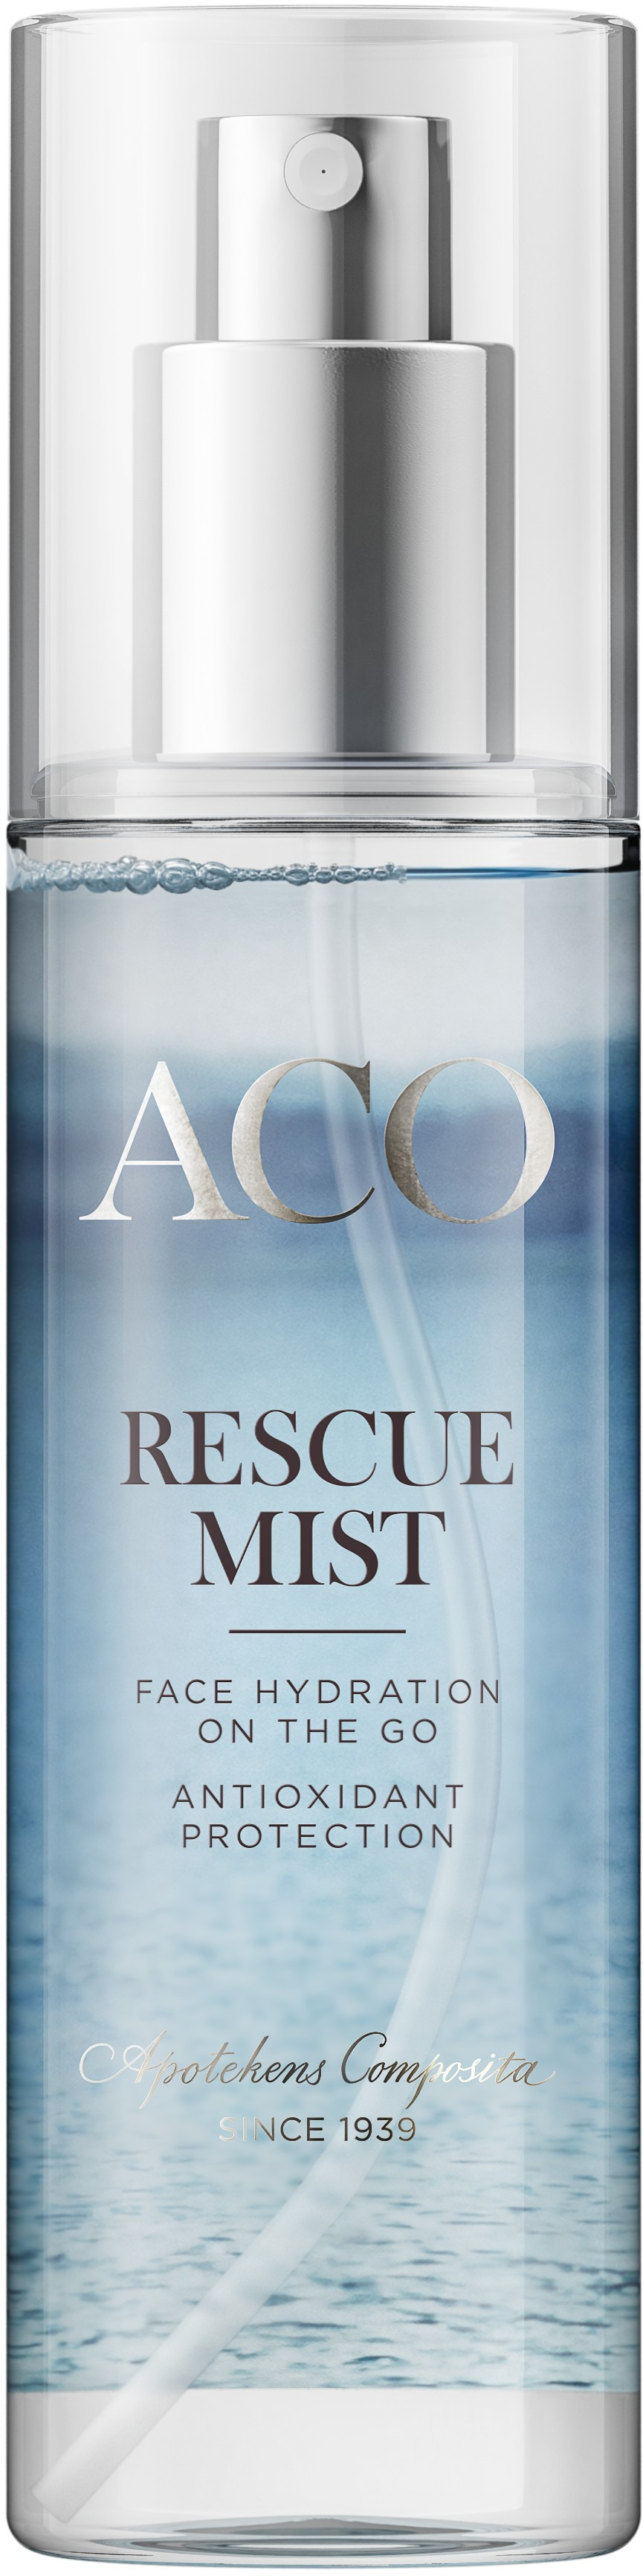 ACO Face Rescue Mist Parf 75ml